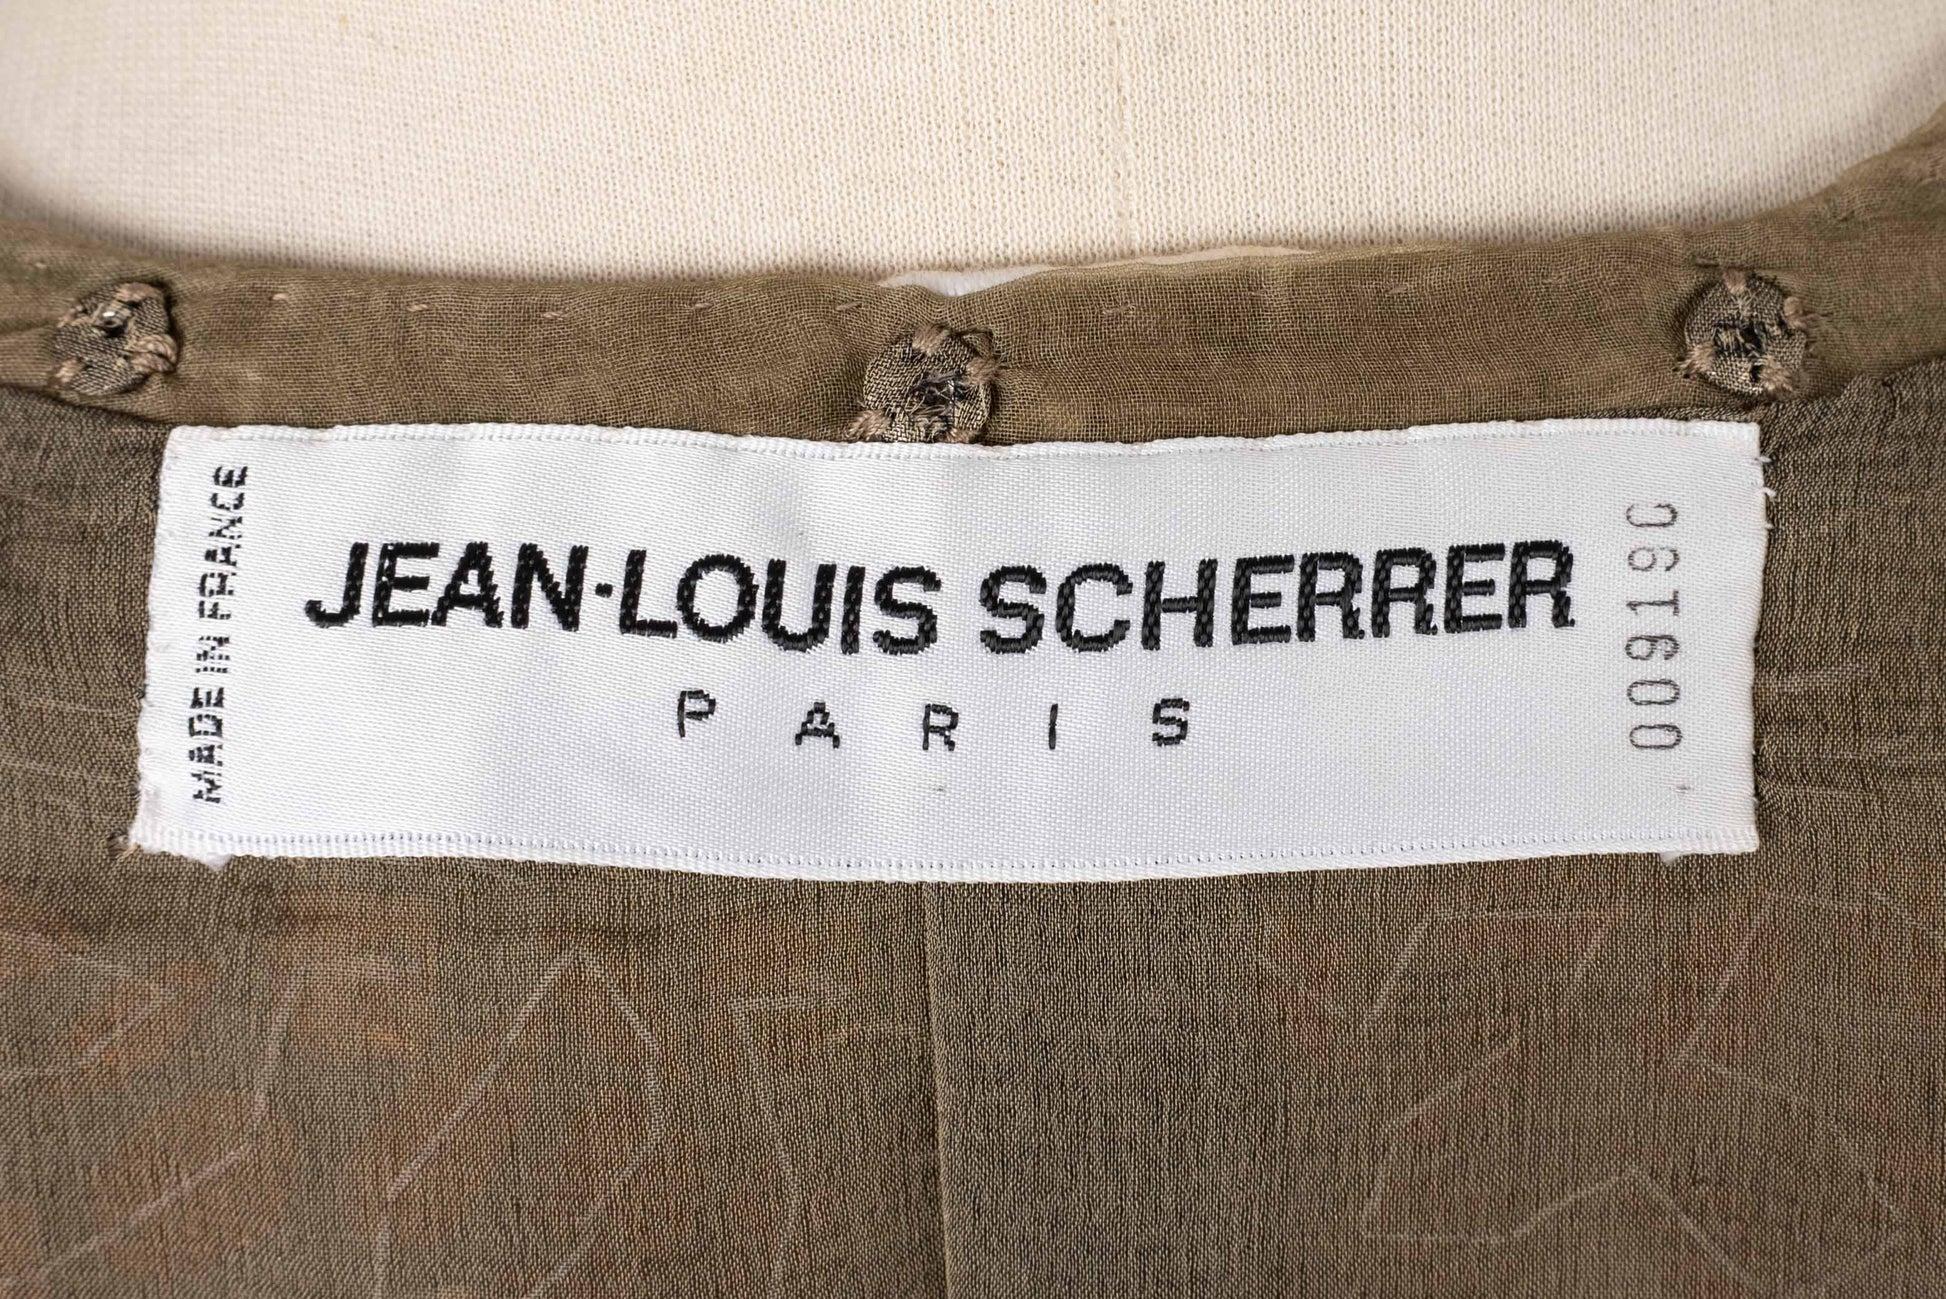 Jean-Louis Scherrer bolero / jacket Haute Couture For Sale 6